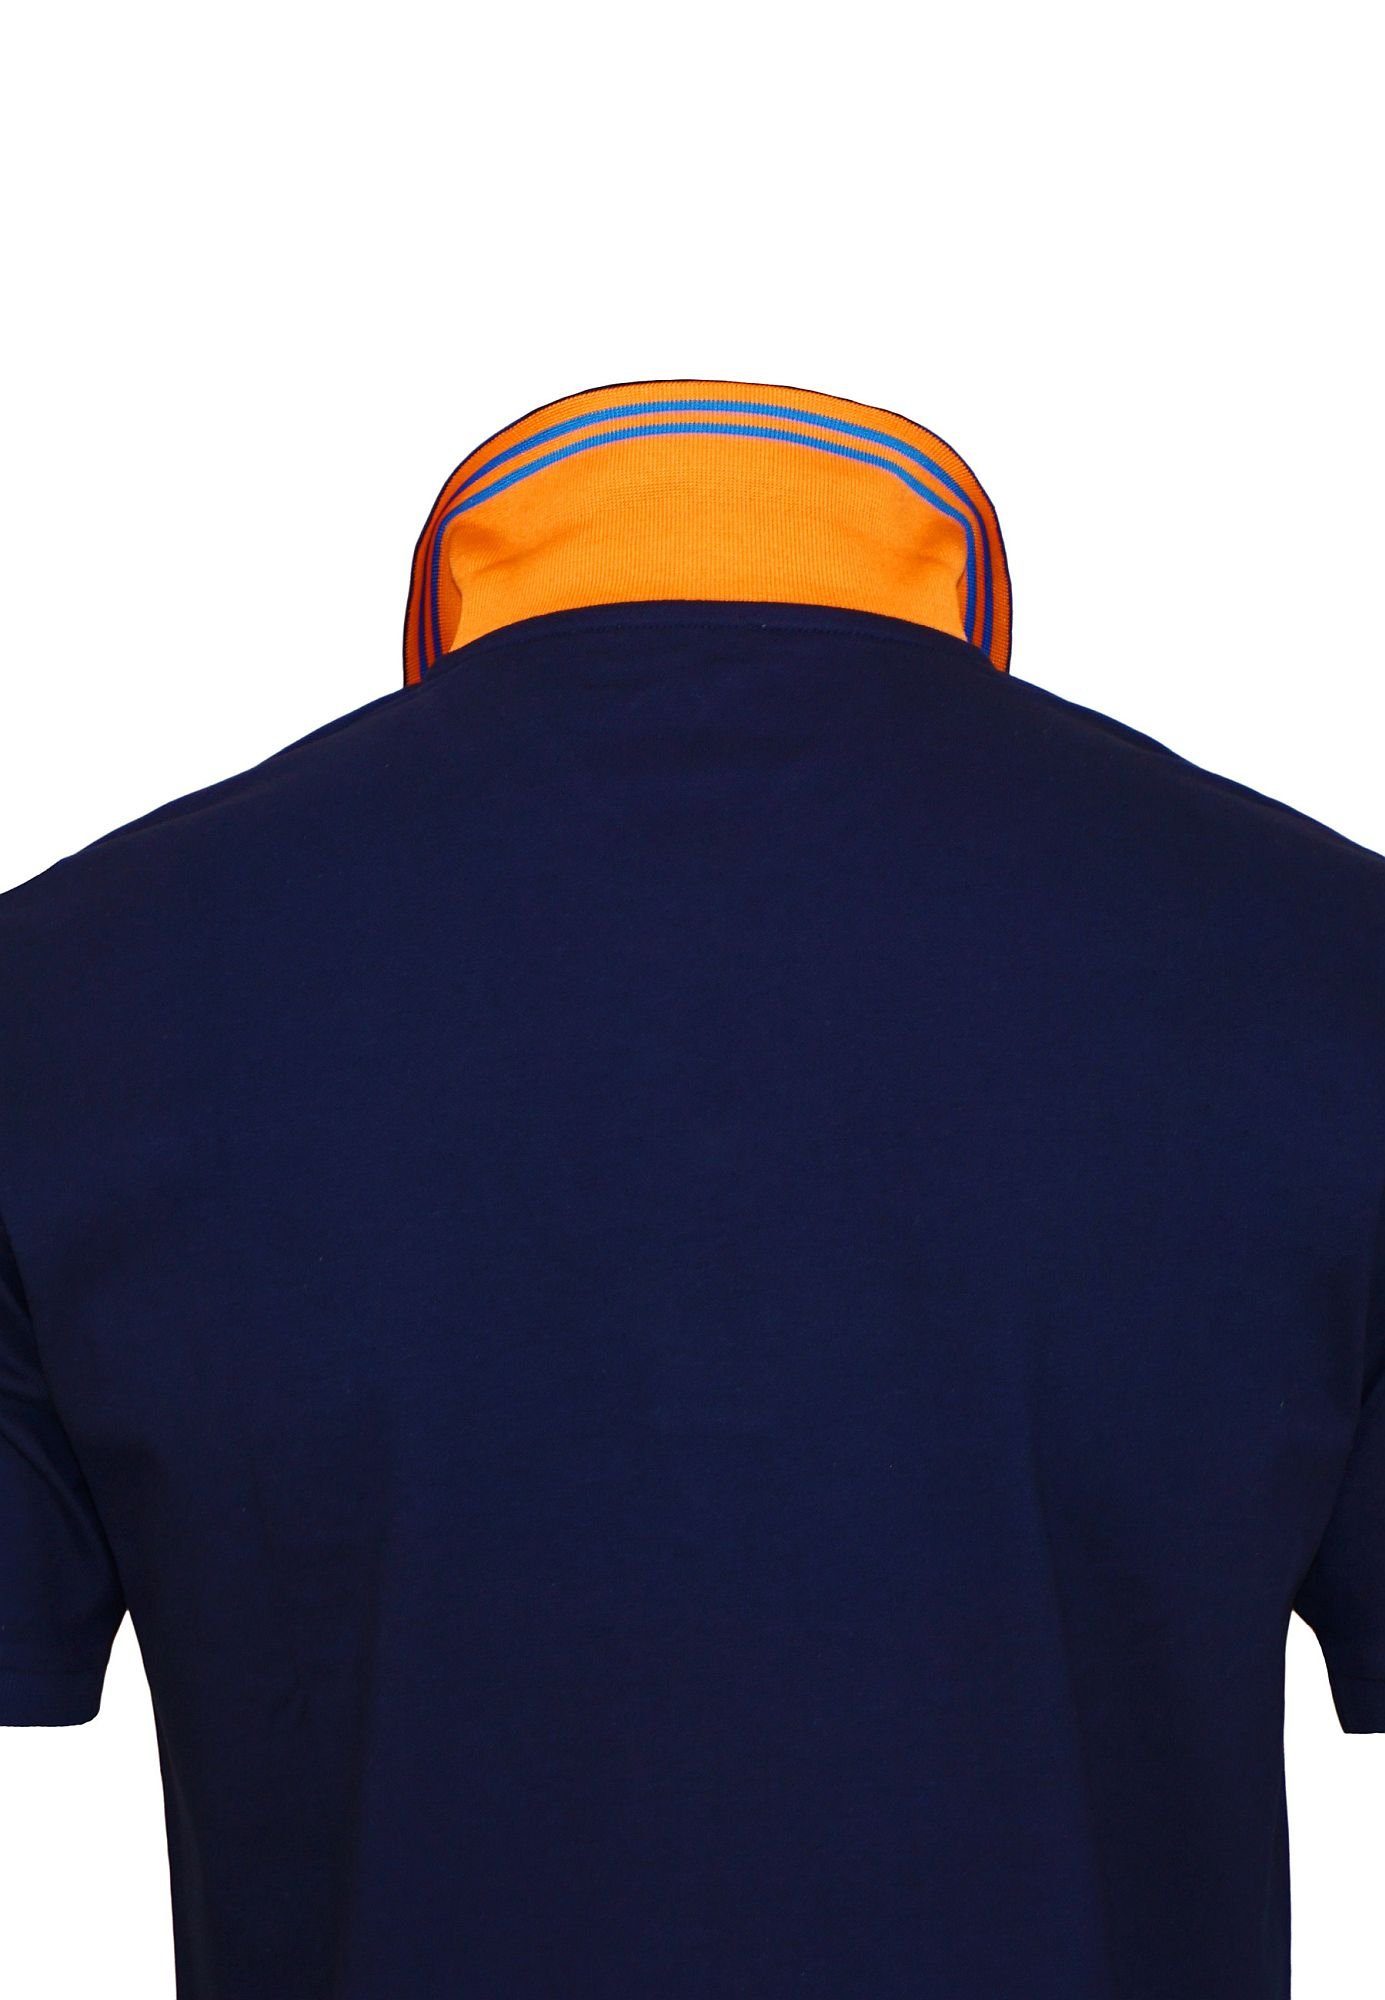 U.S. Polo Assn Poloshirt Kory Poloshirt Polohemd Shirt dunkelblau